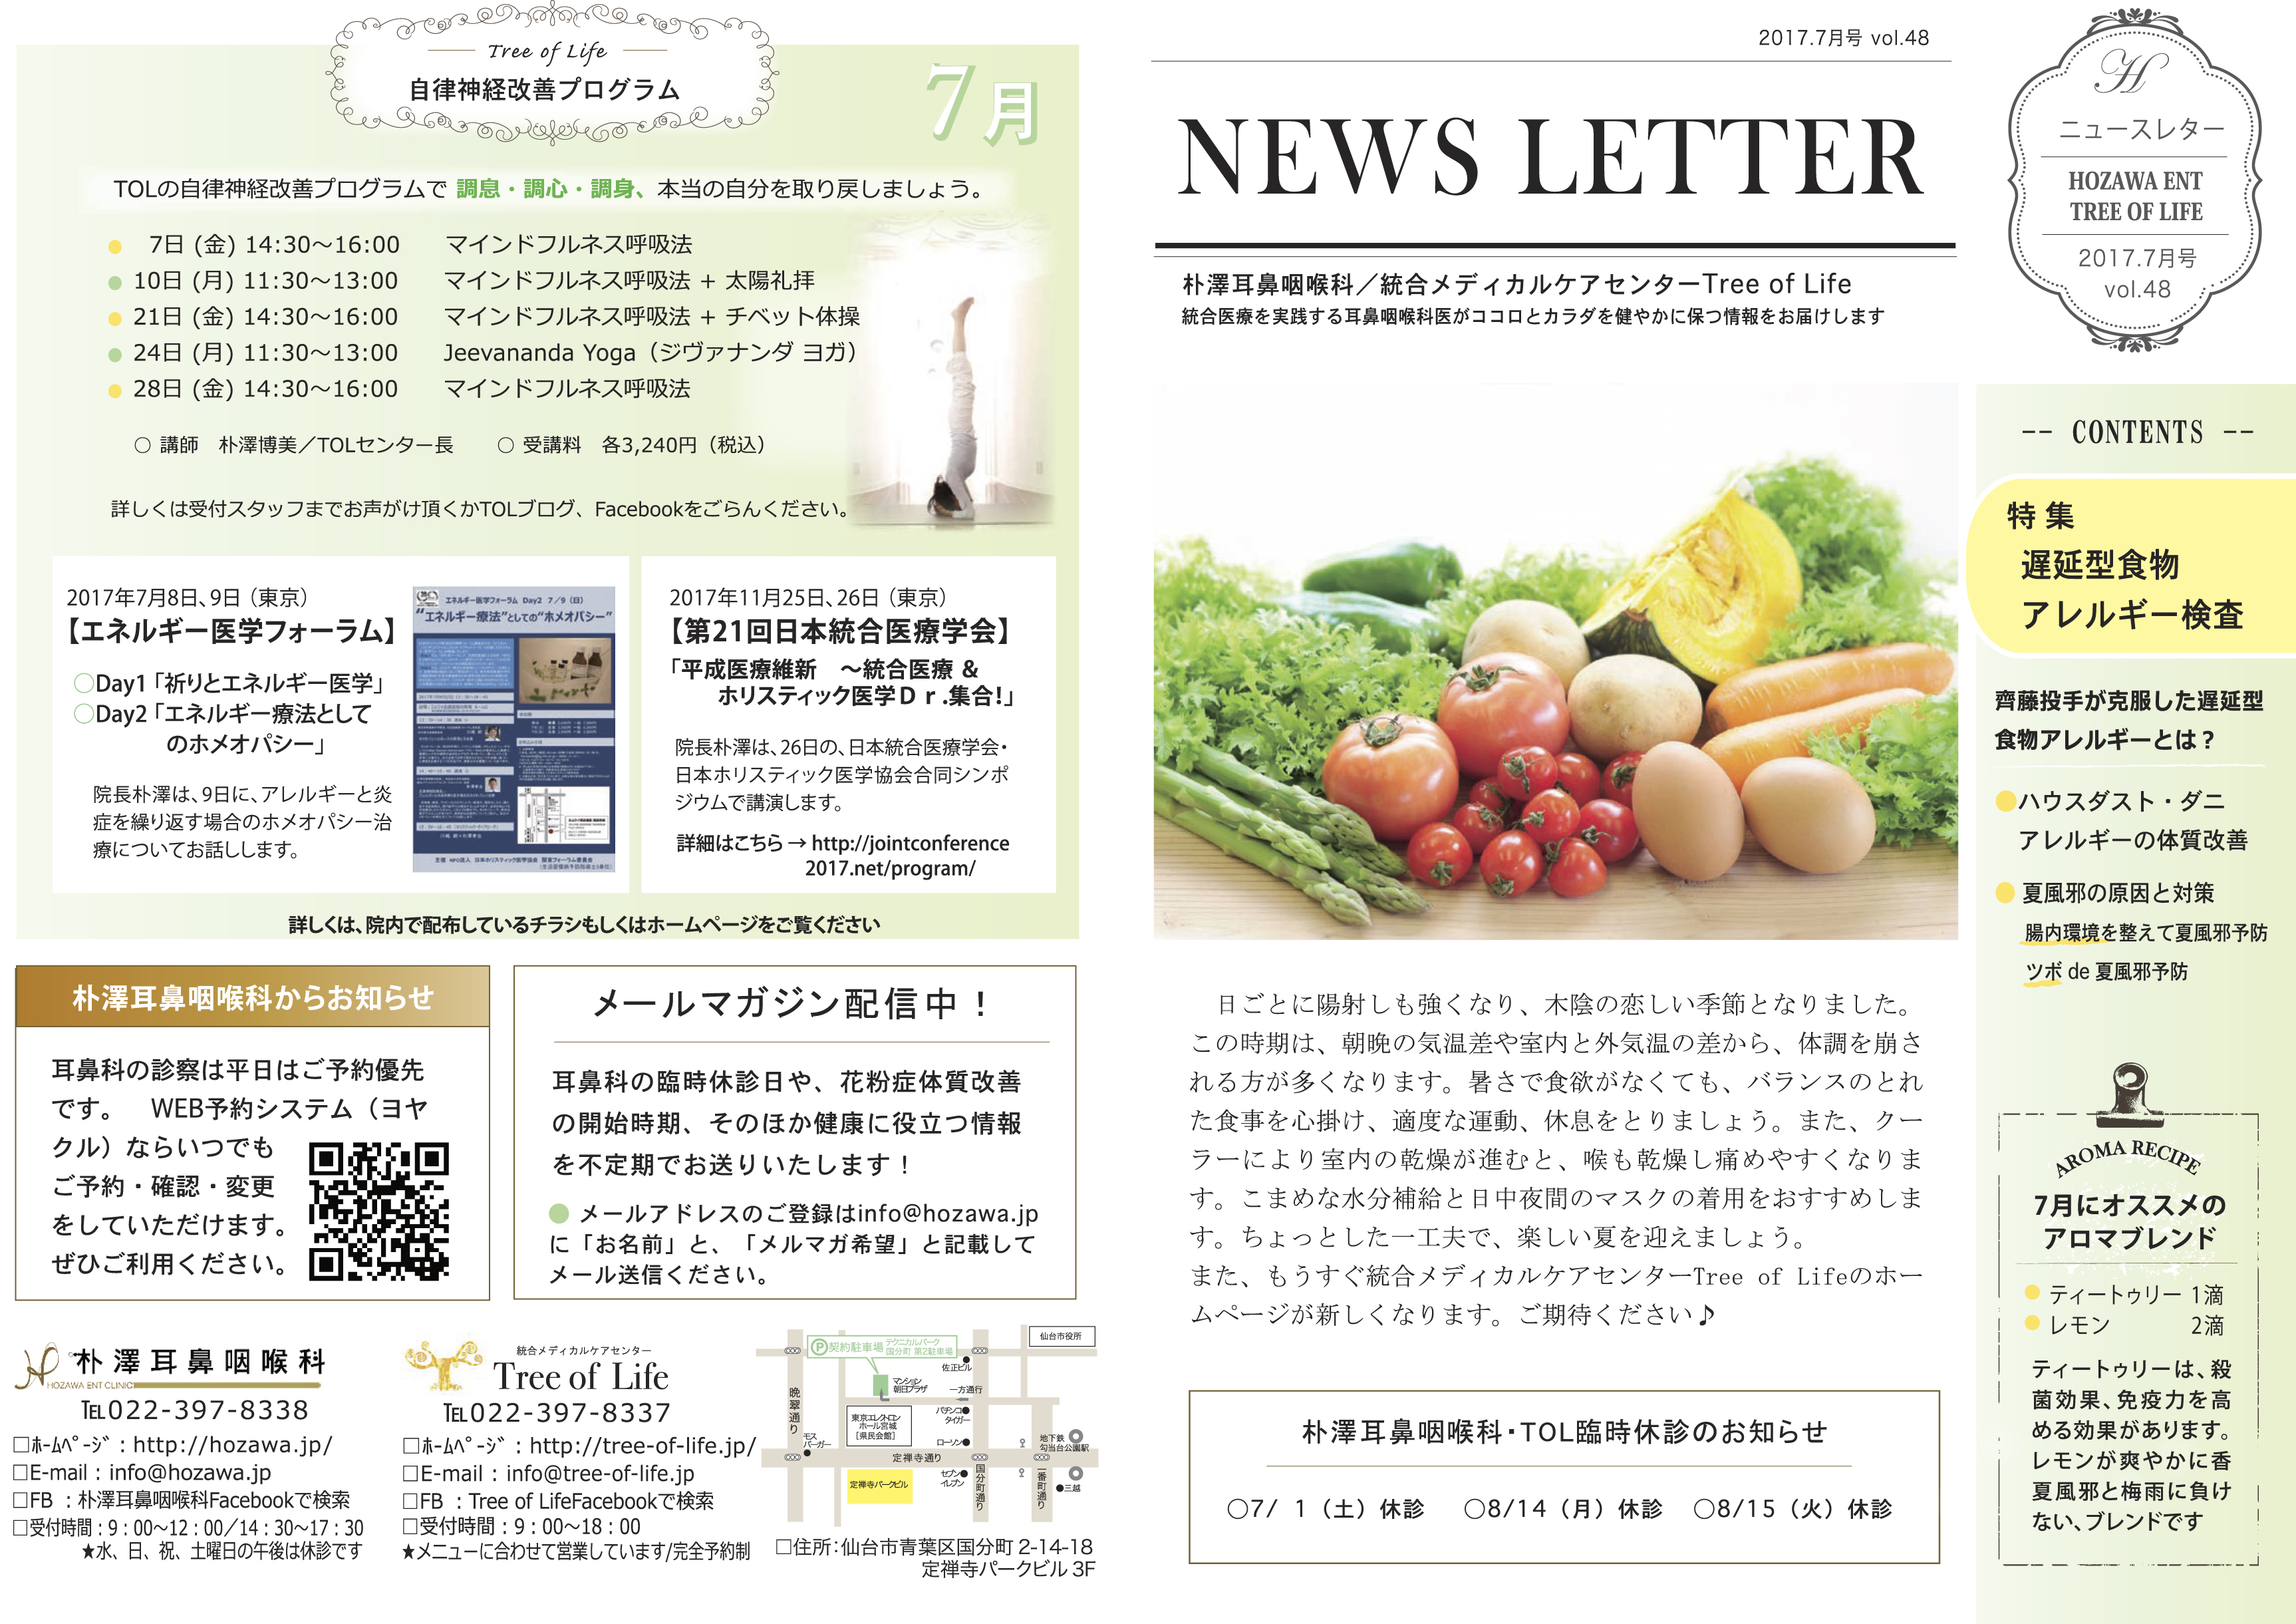 http://hozawa.jp/news/news_img/1706302066_01L-1.jpg